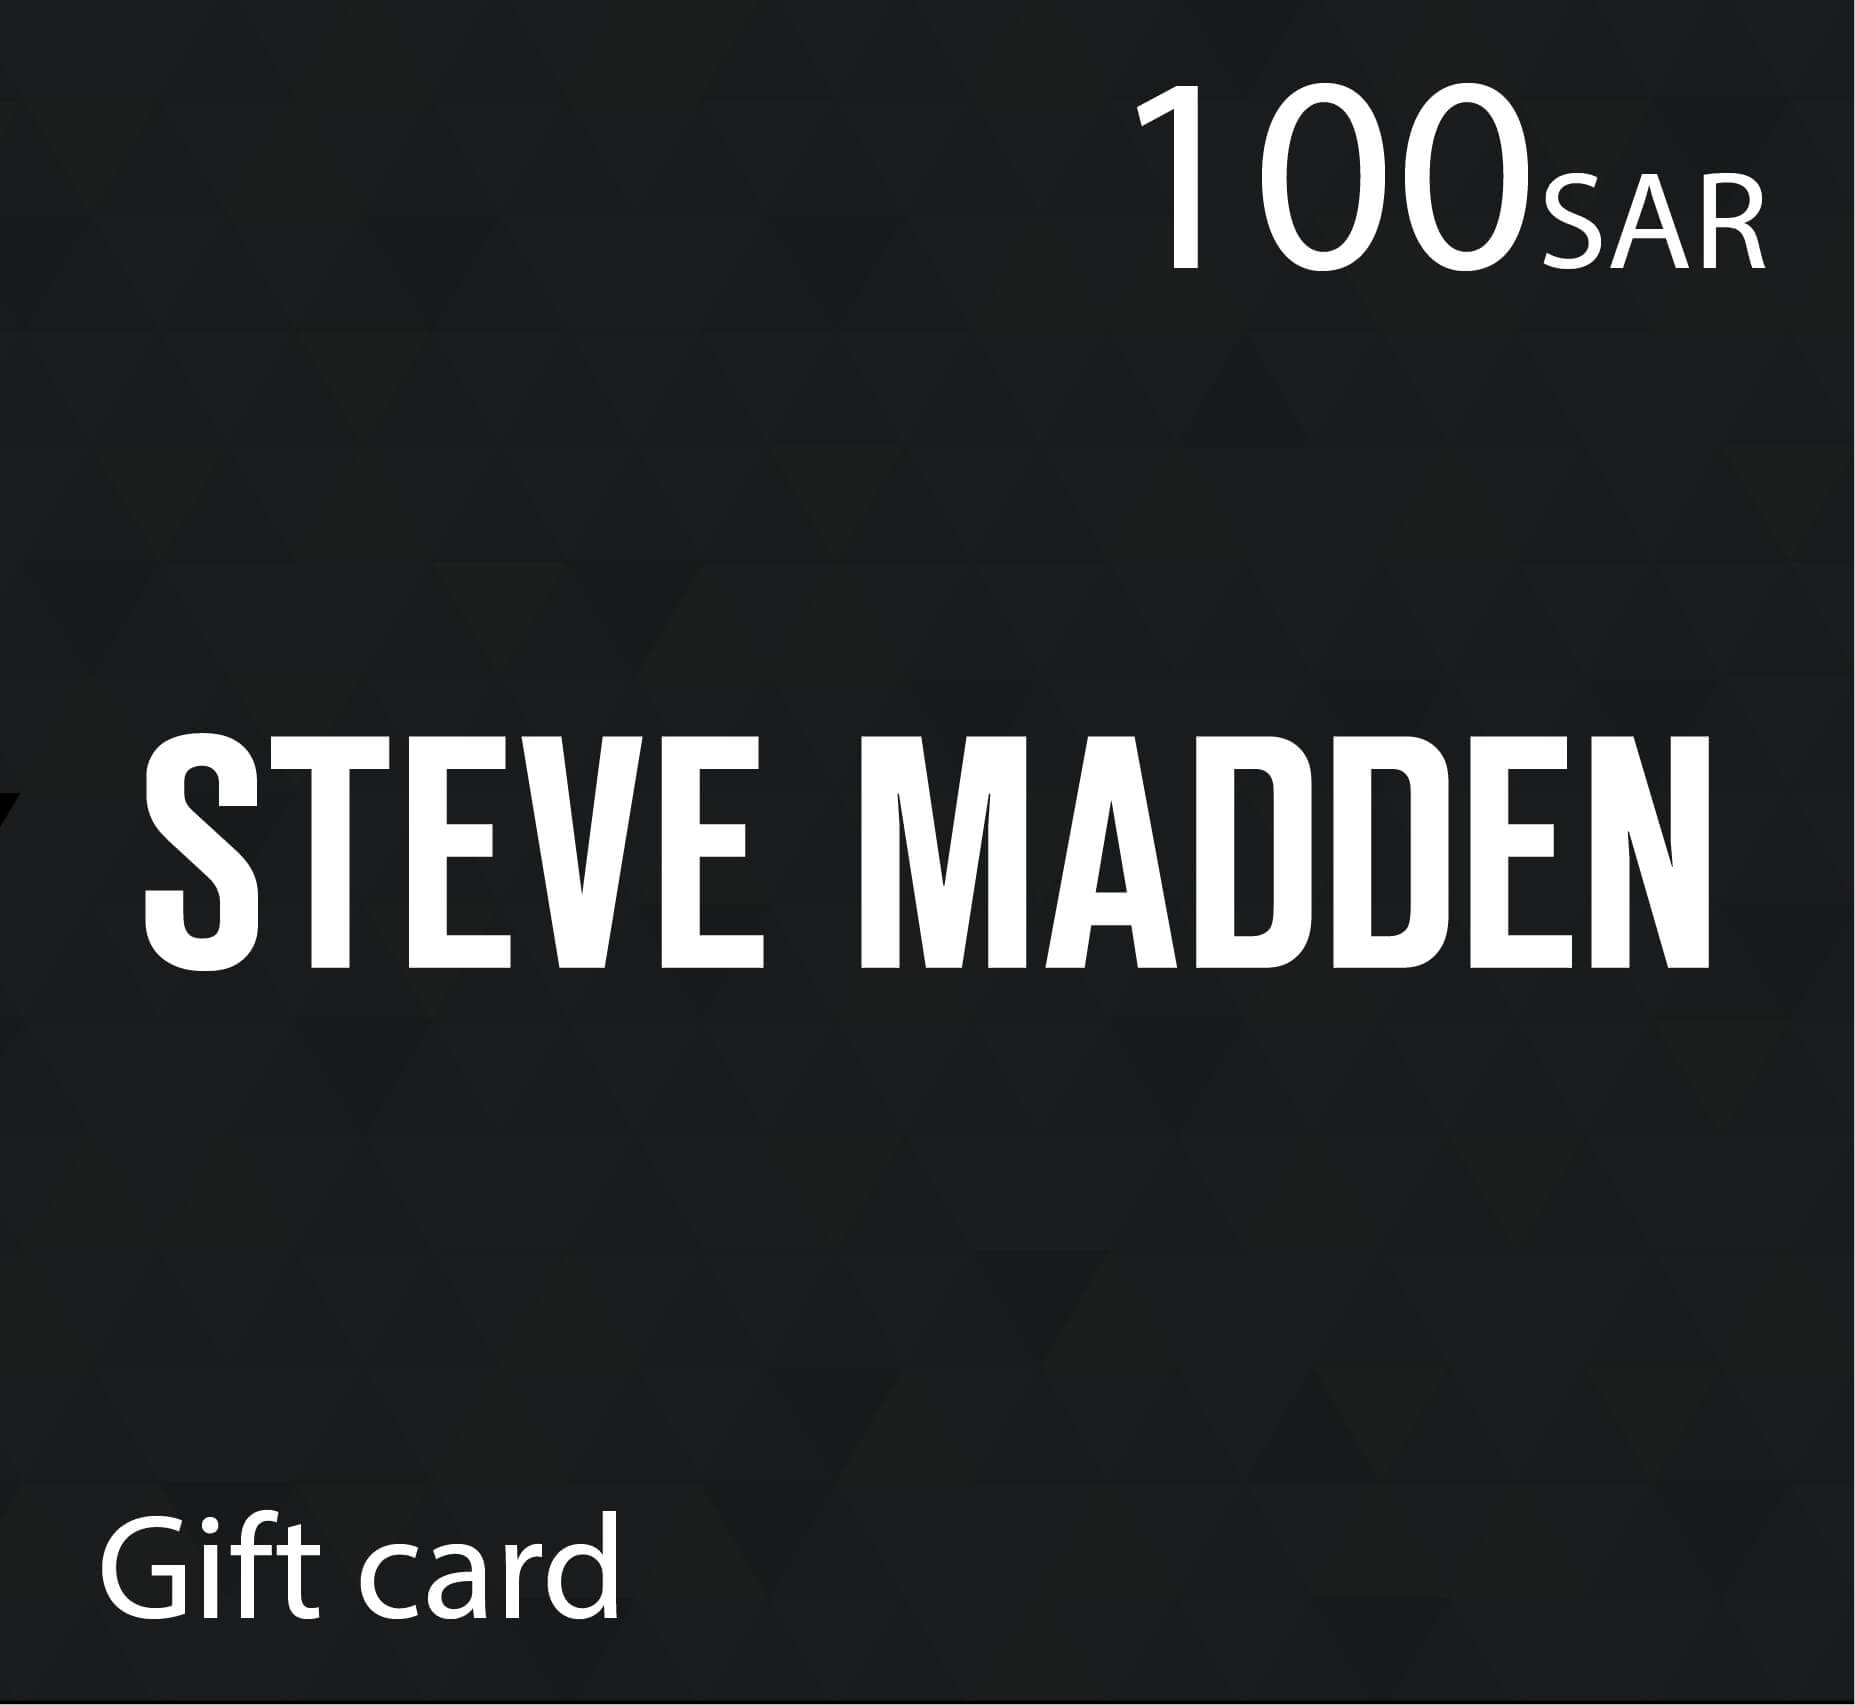 Steve Madden Gift Card - 100 SAR